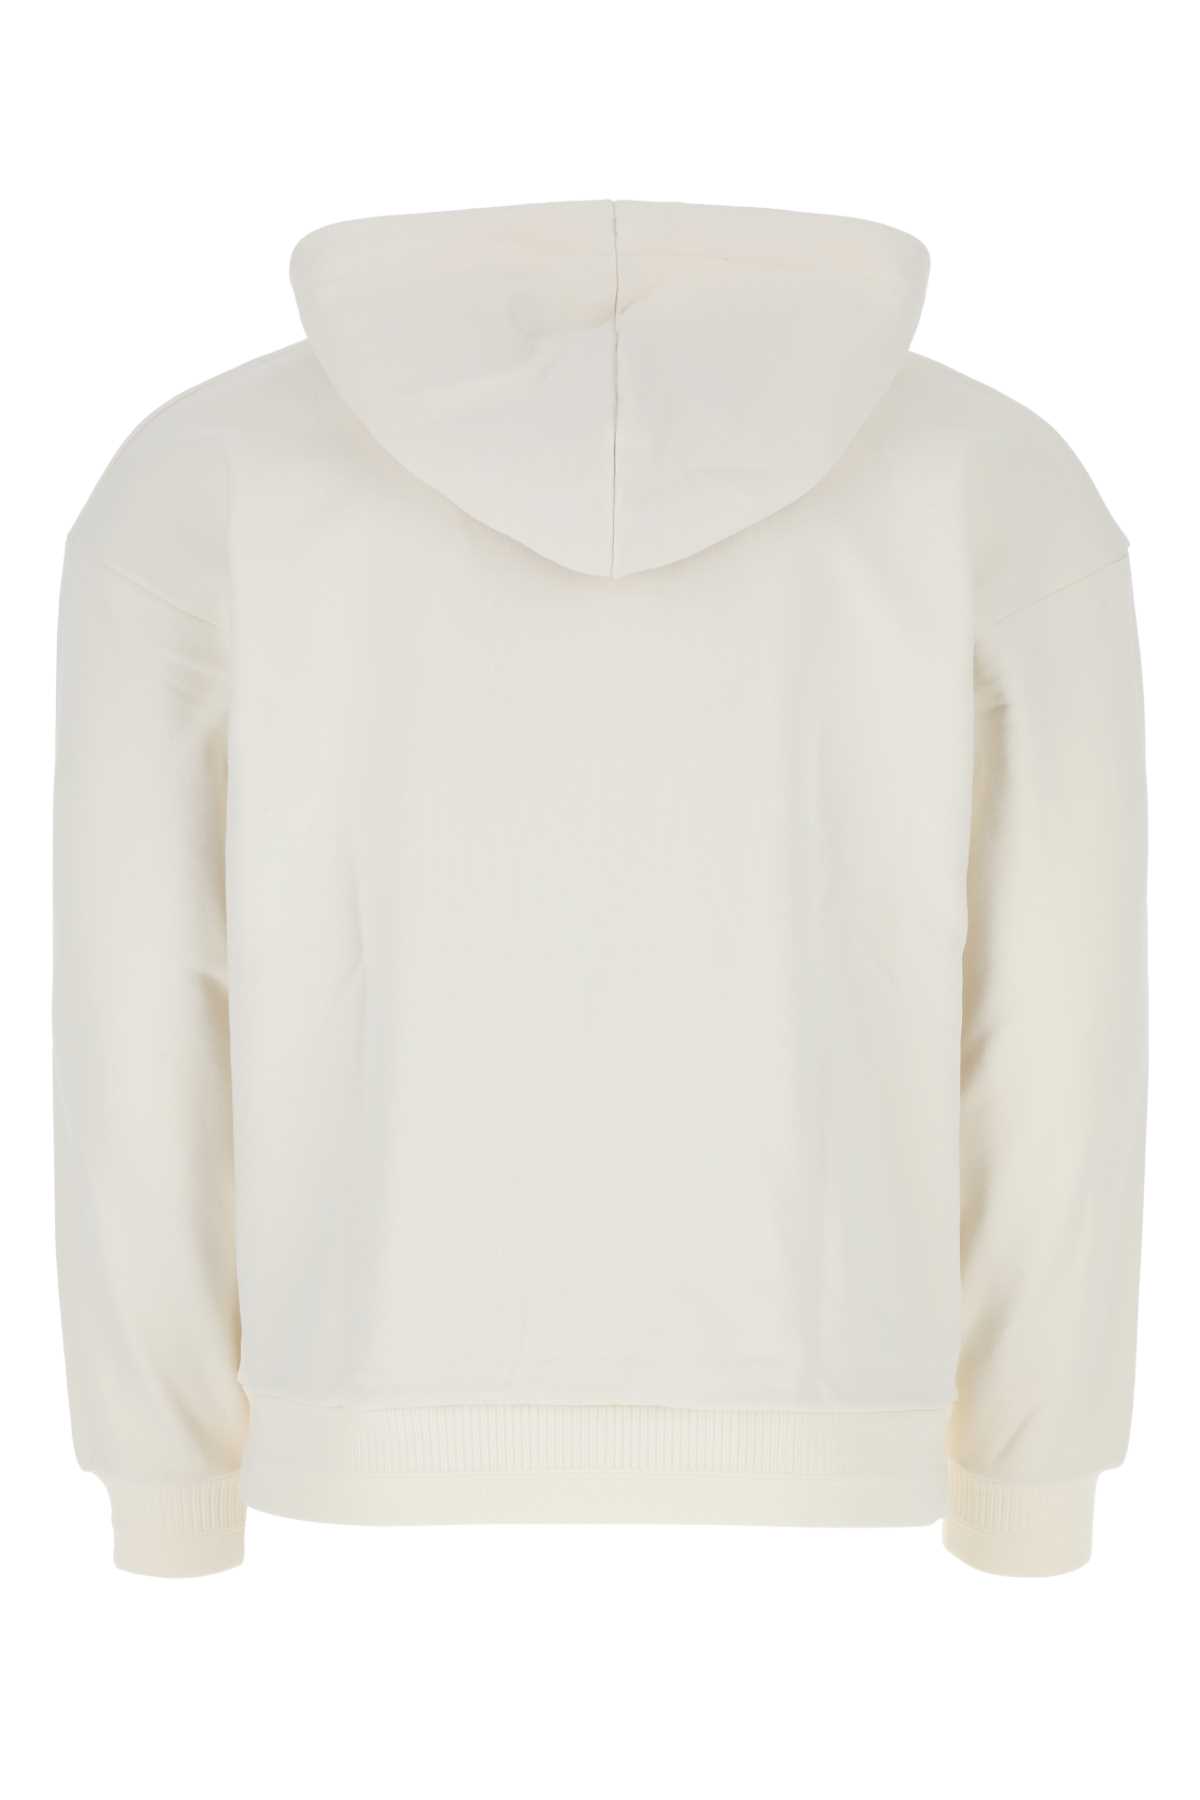 Mcm Ivory Cotton Sweatshirt In Wg